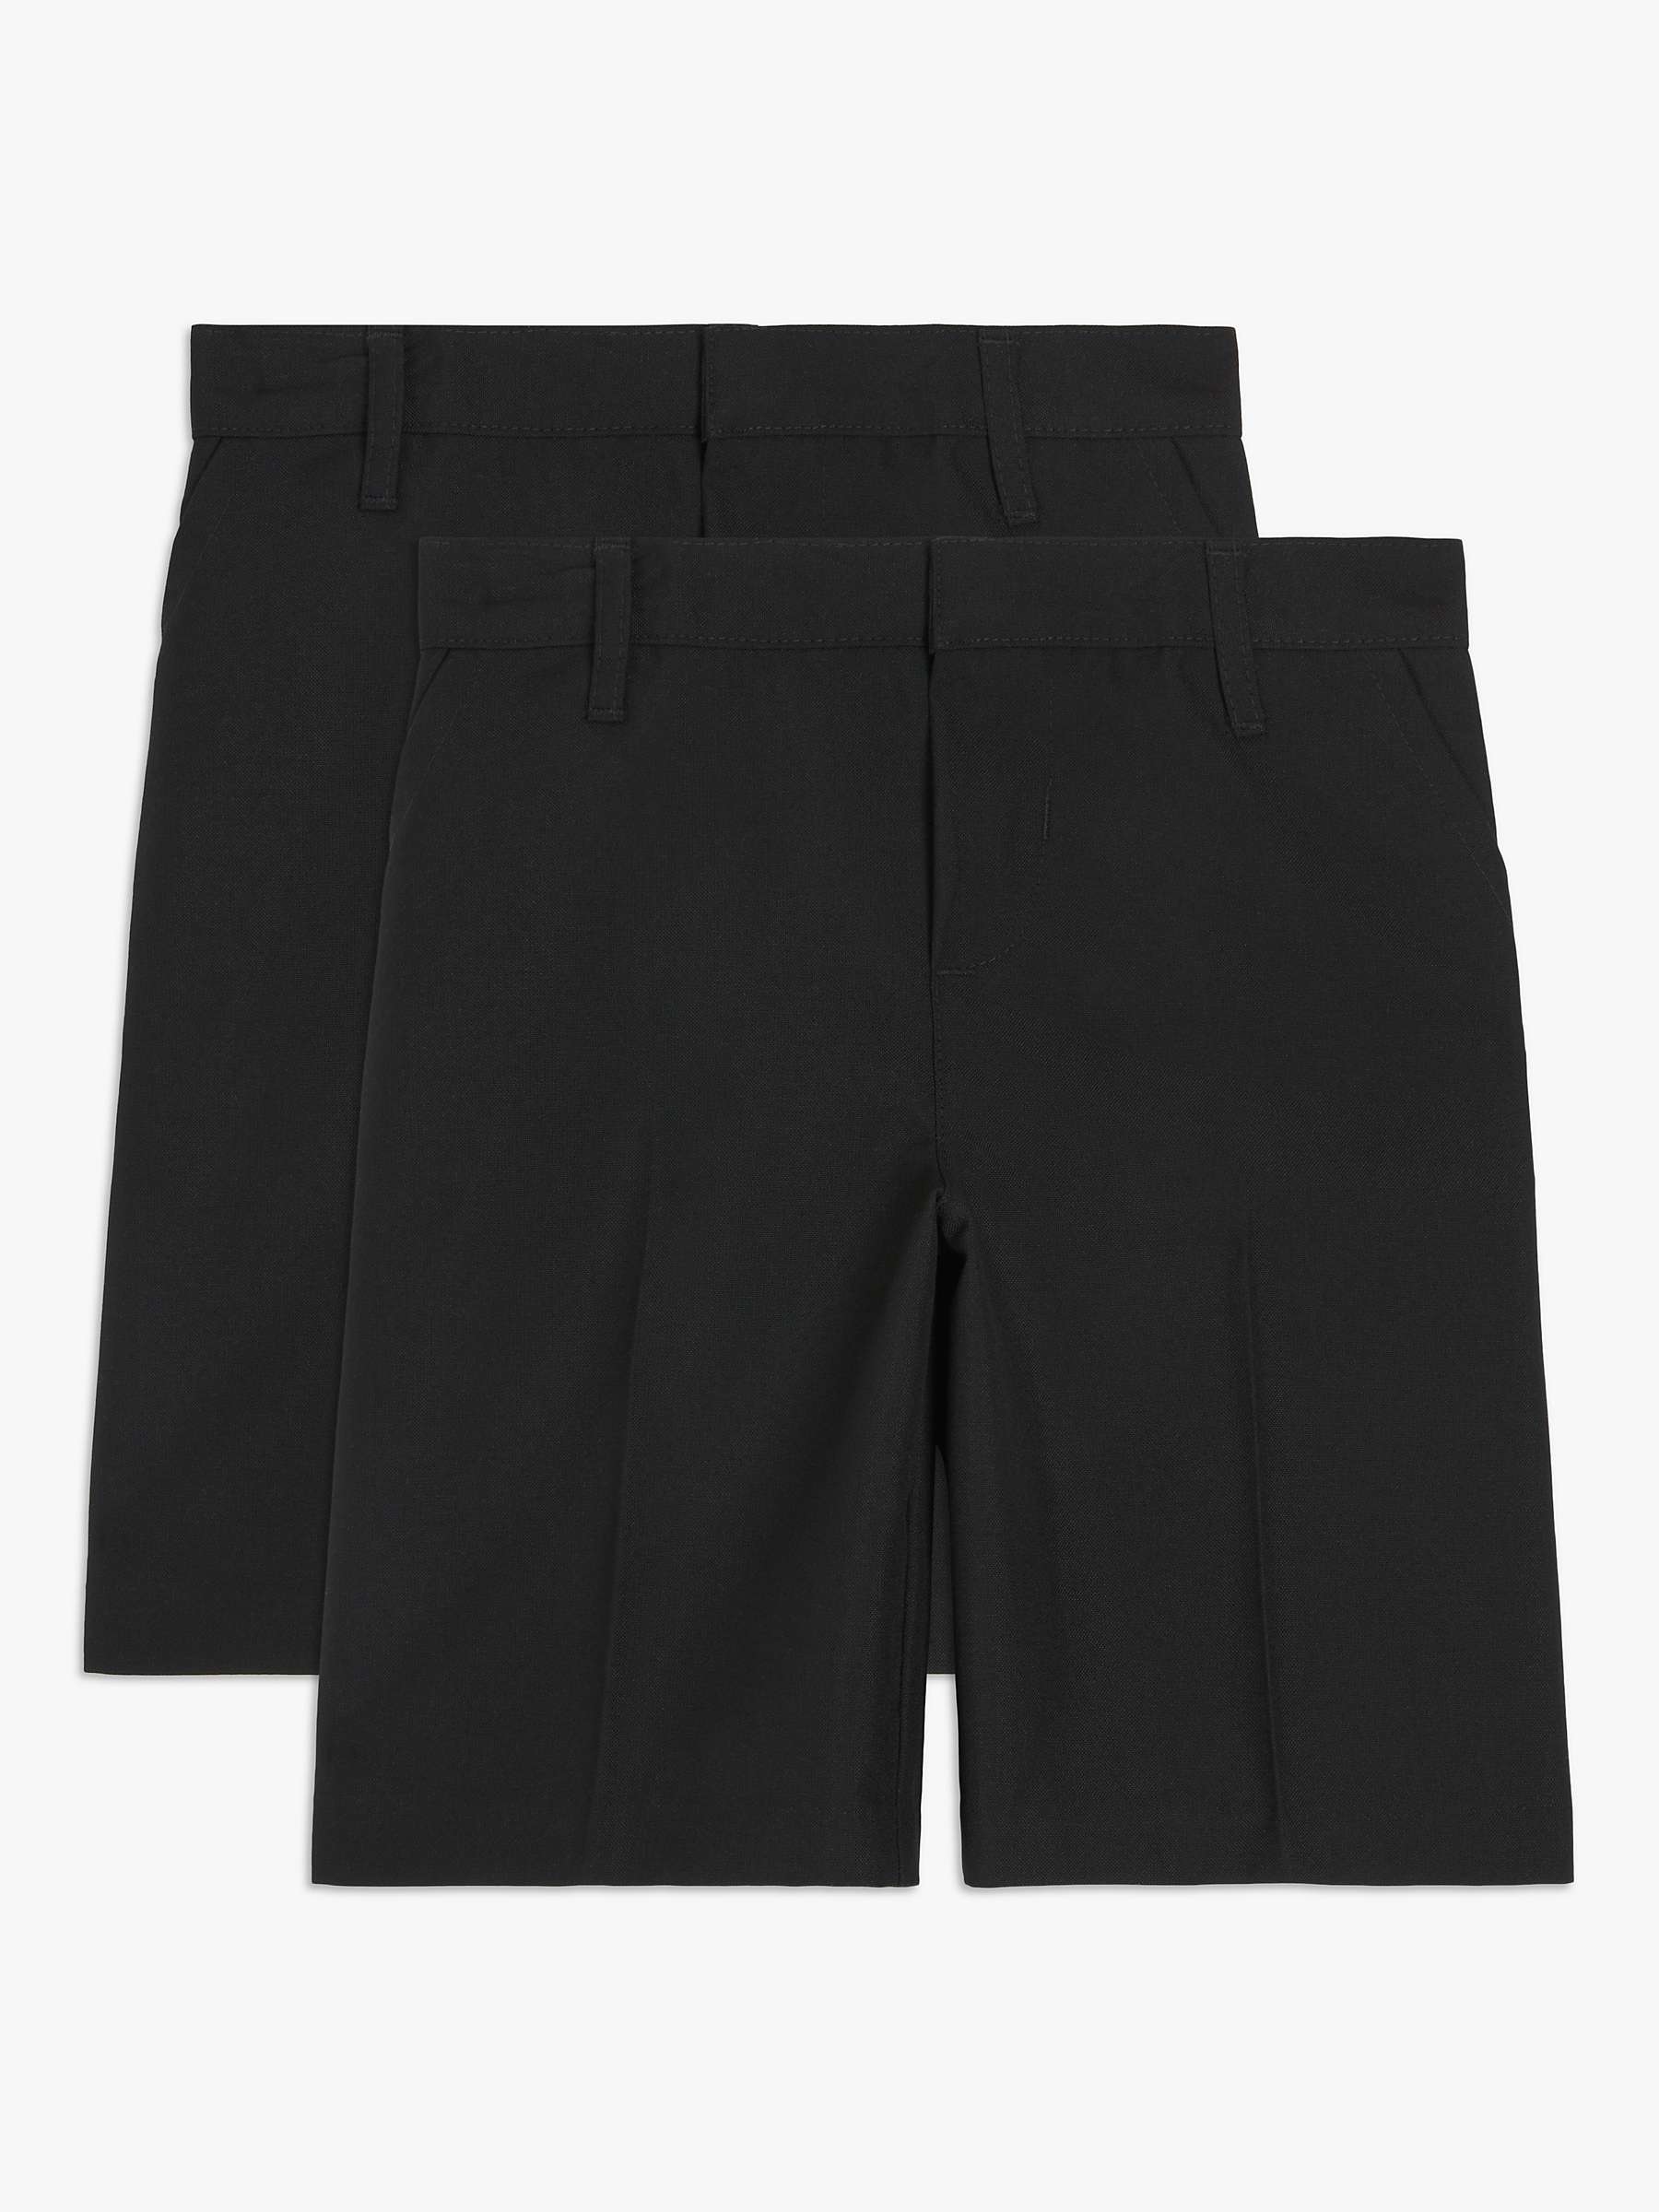 Buy John Lewis ANYDAY Kids' Adjustable Waist Stain Resistant School Shorts, Pack of 2, Black Online at johnlewis.com